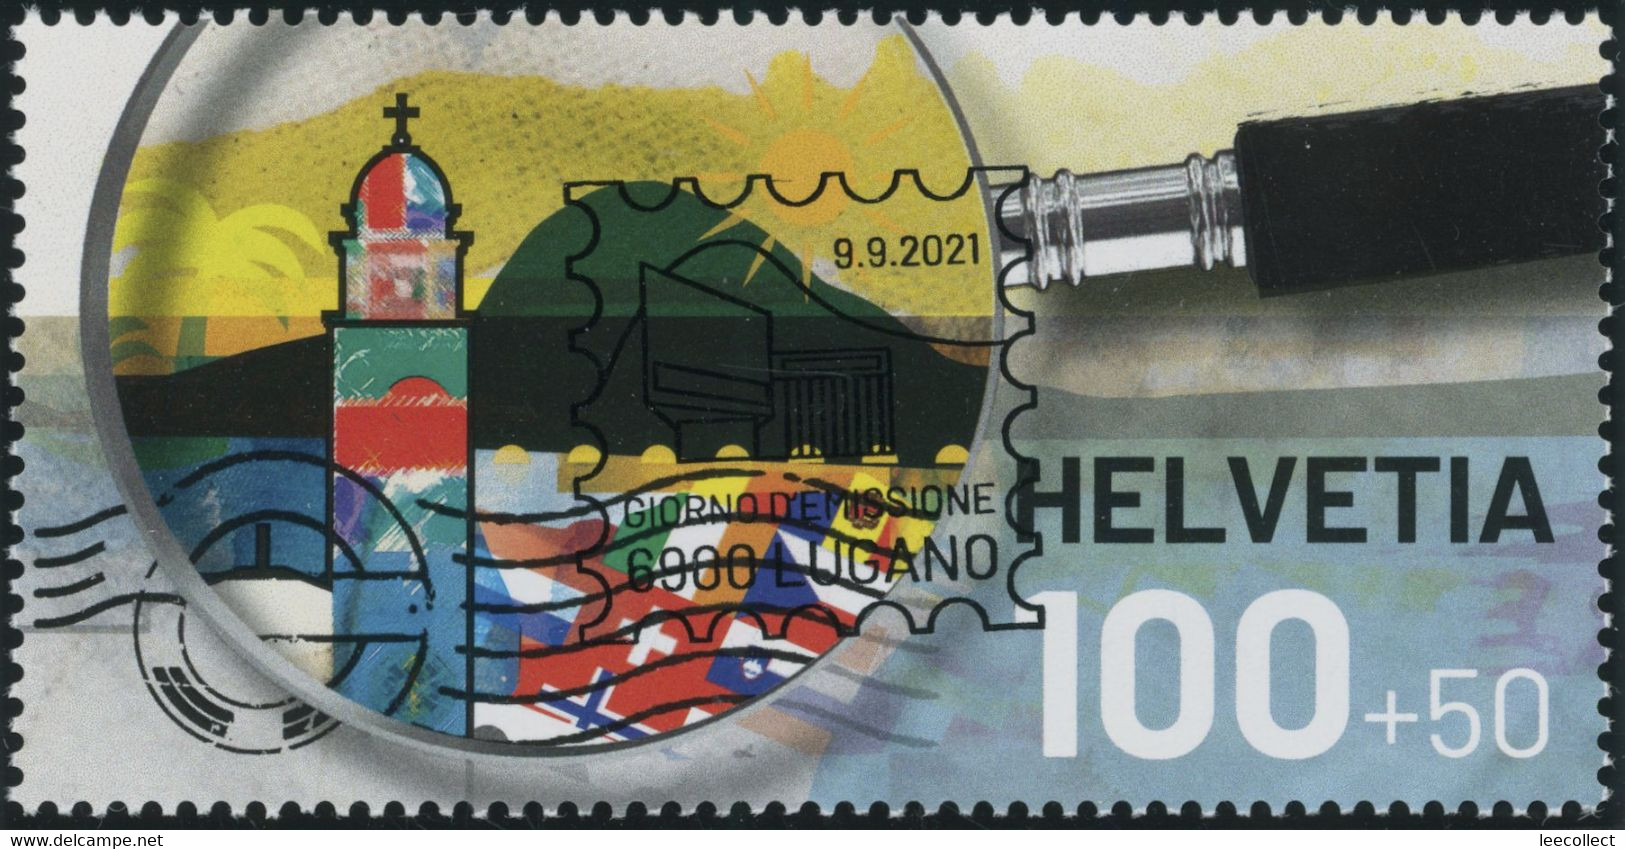 Suisse - 2021 - Helvetia - Blockausschnitte - Ersttag Voll Stempel ET - Used Stamps